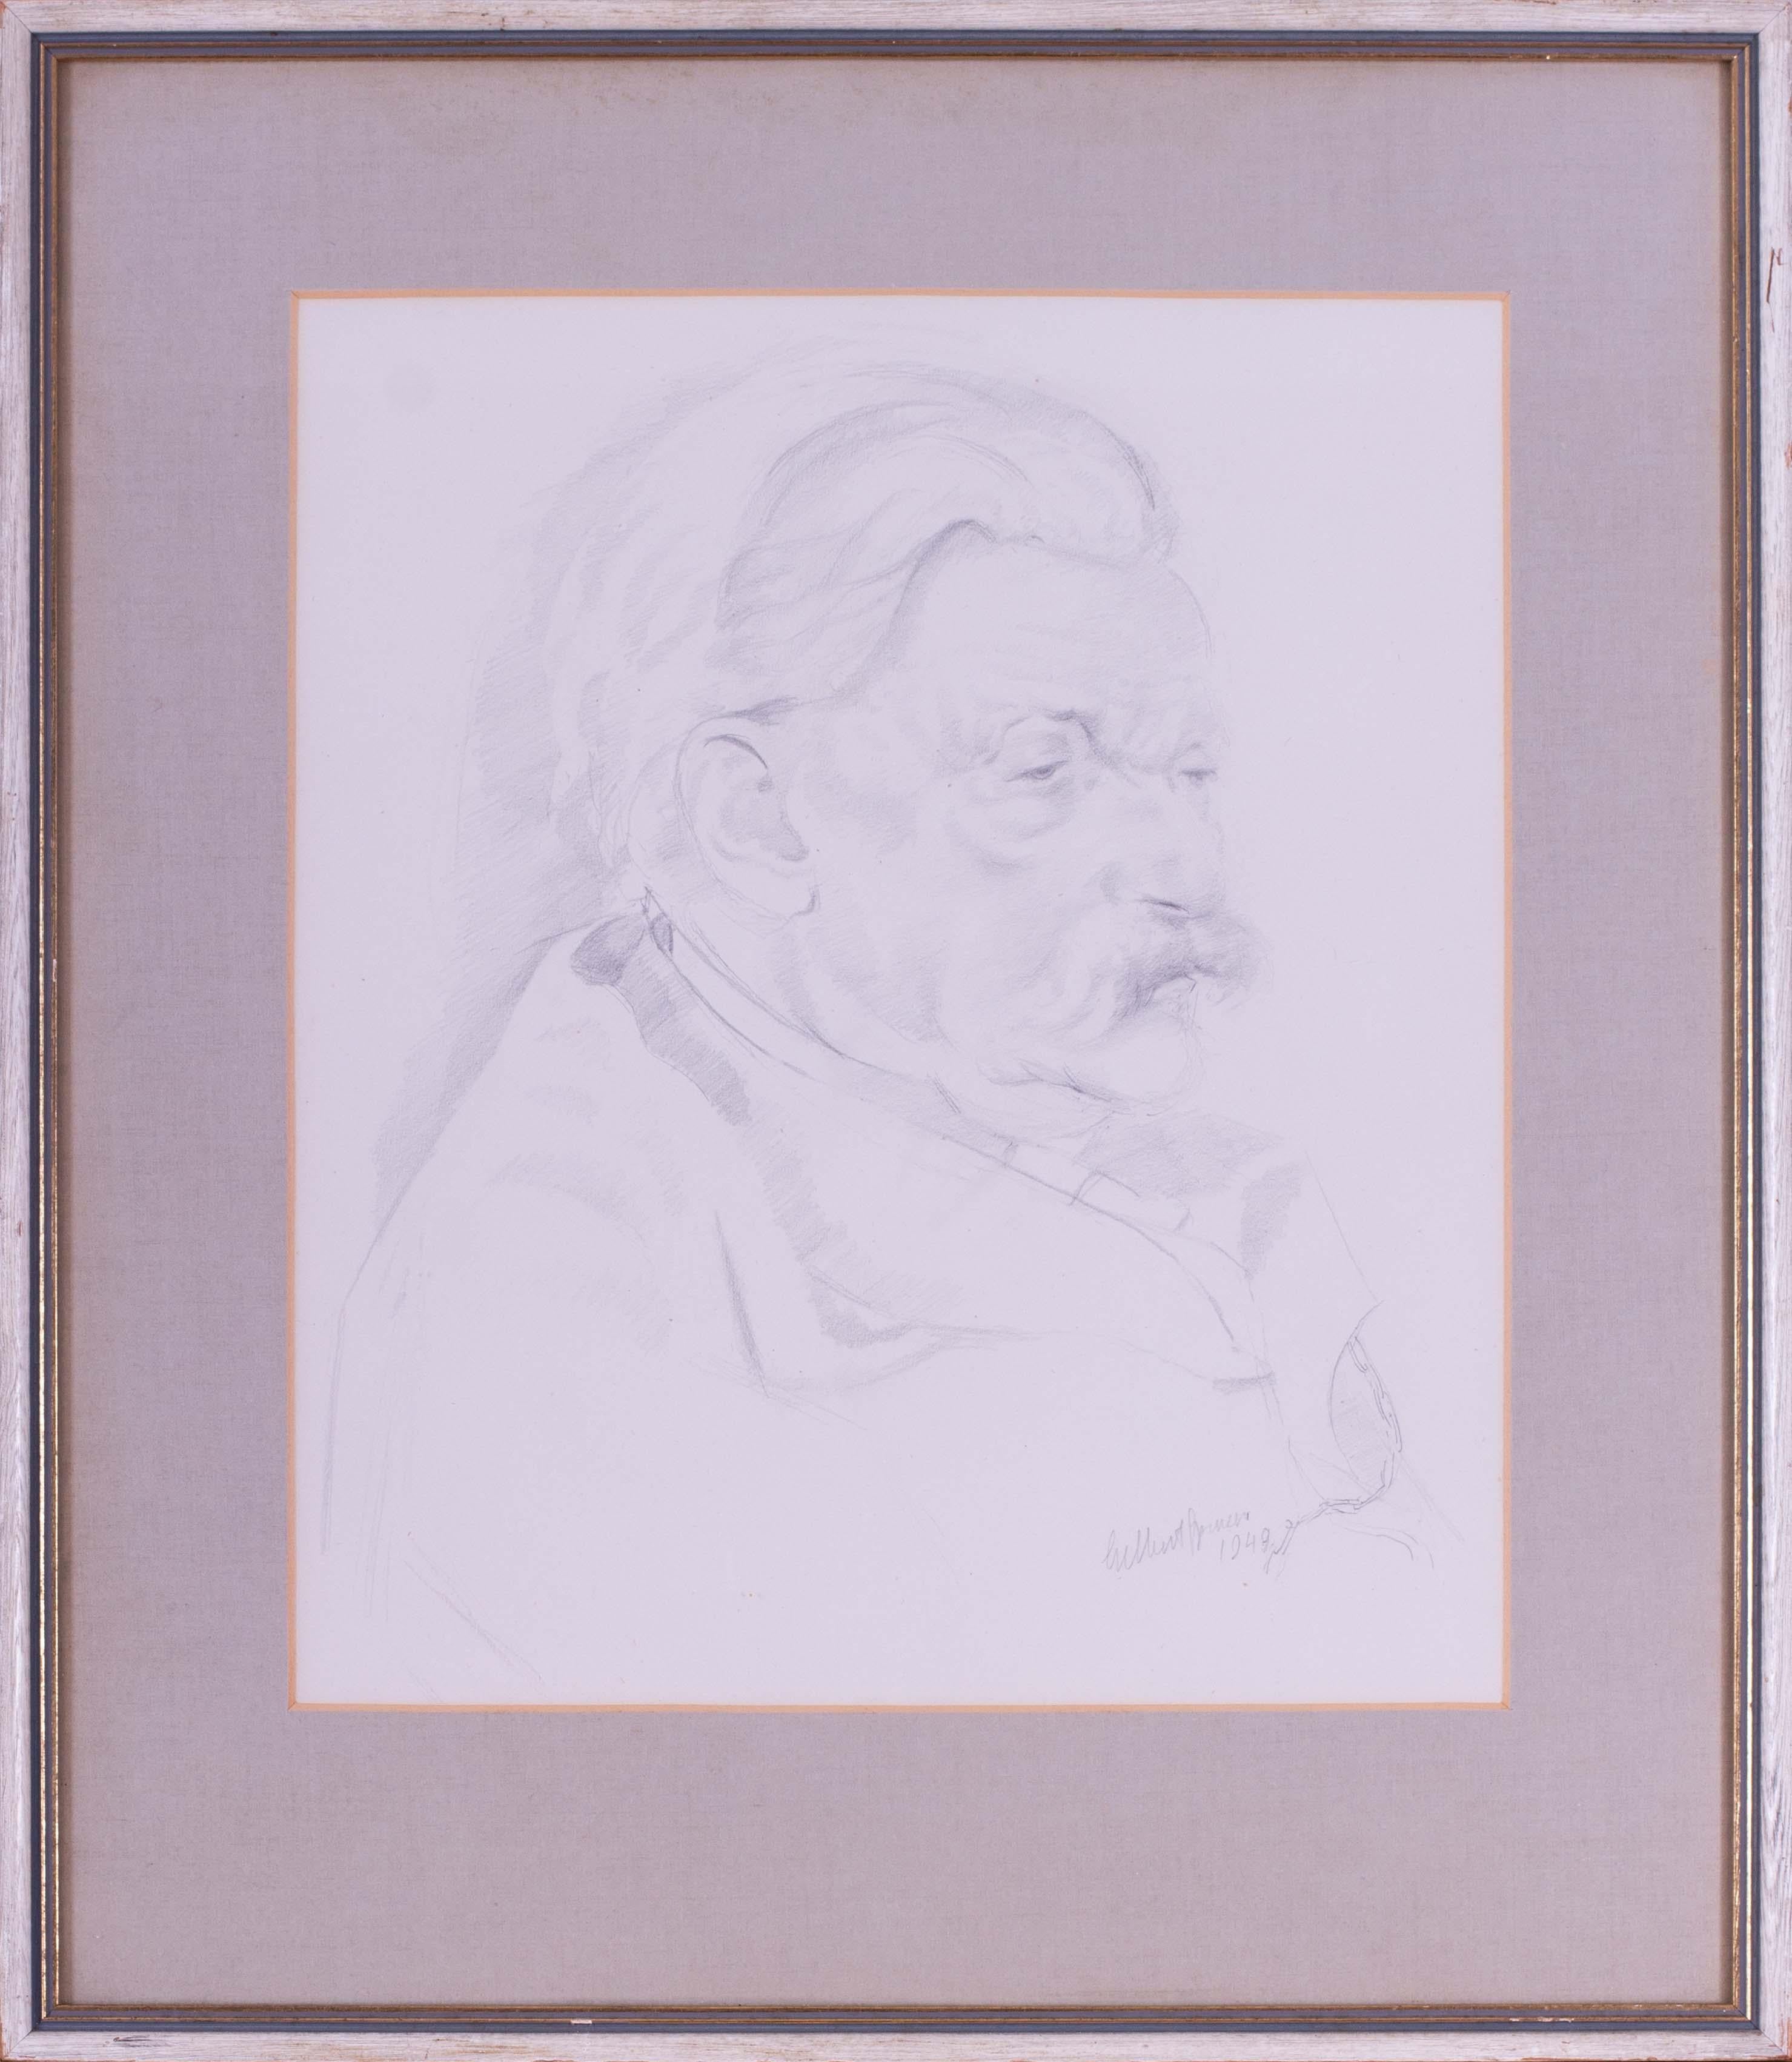 Gilbert Spencer RA, RWS, NEAC Portrait - 20th Century drawing of William Docker Drysdale by Gilbert Spencer